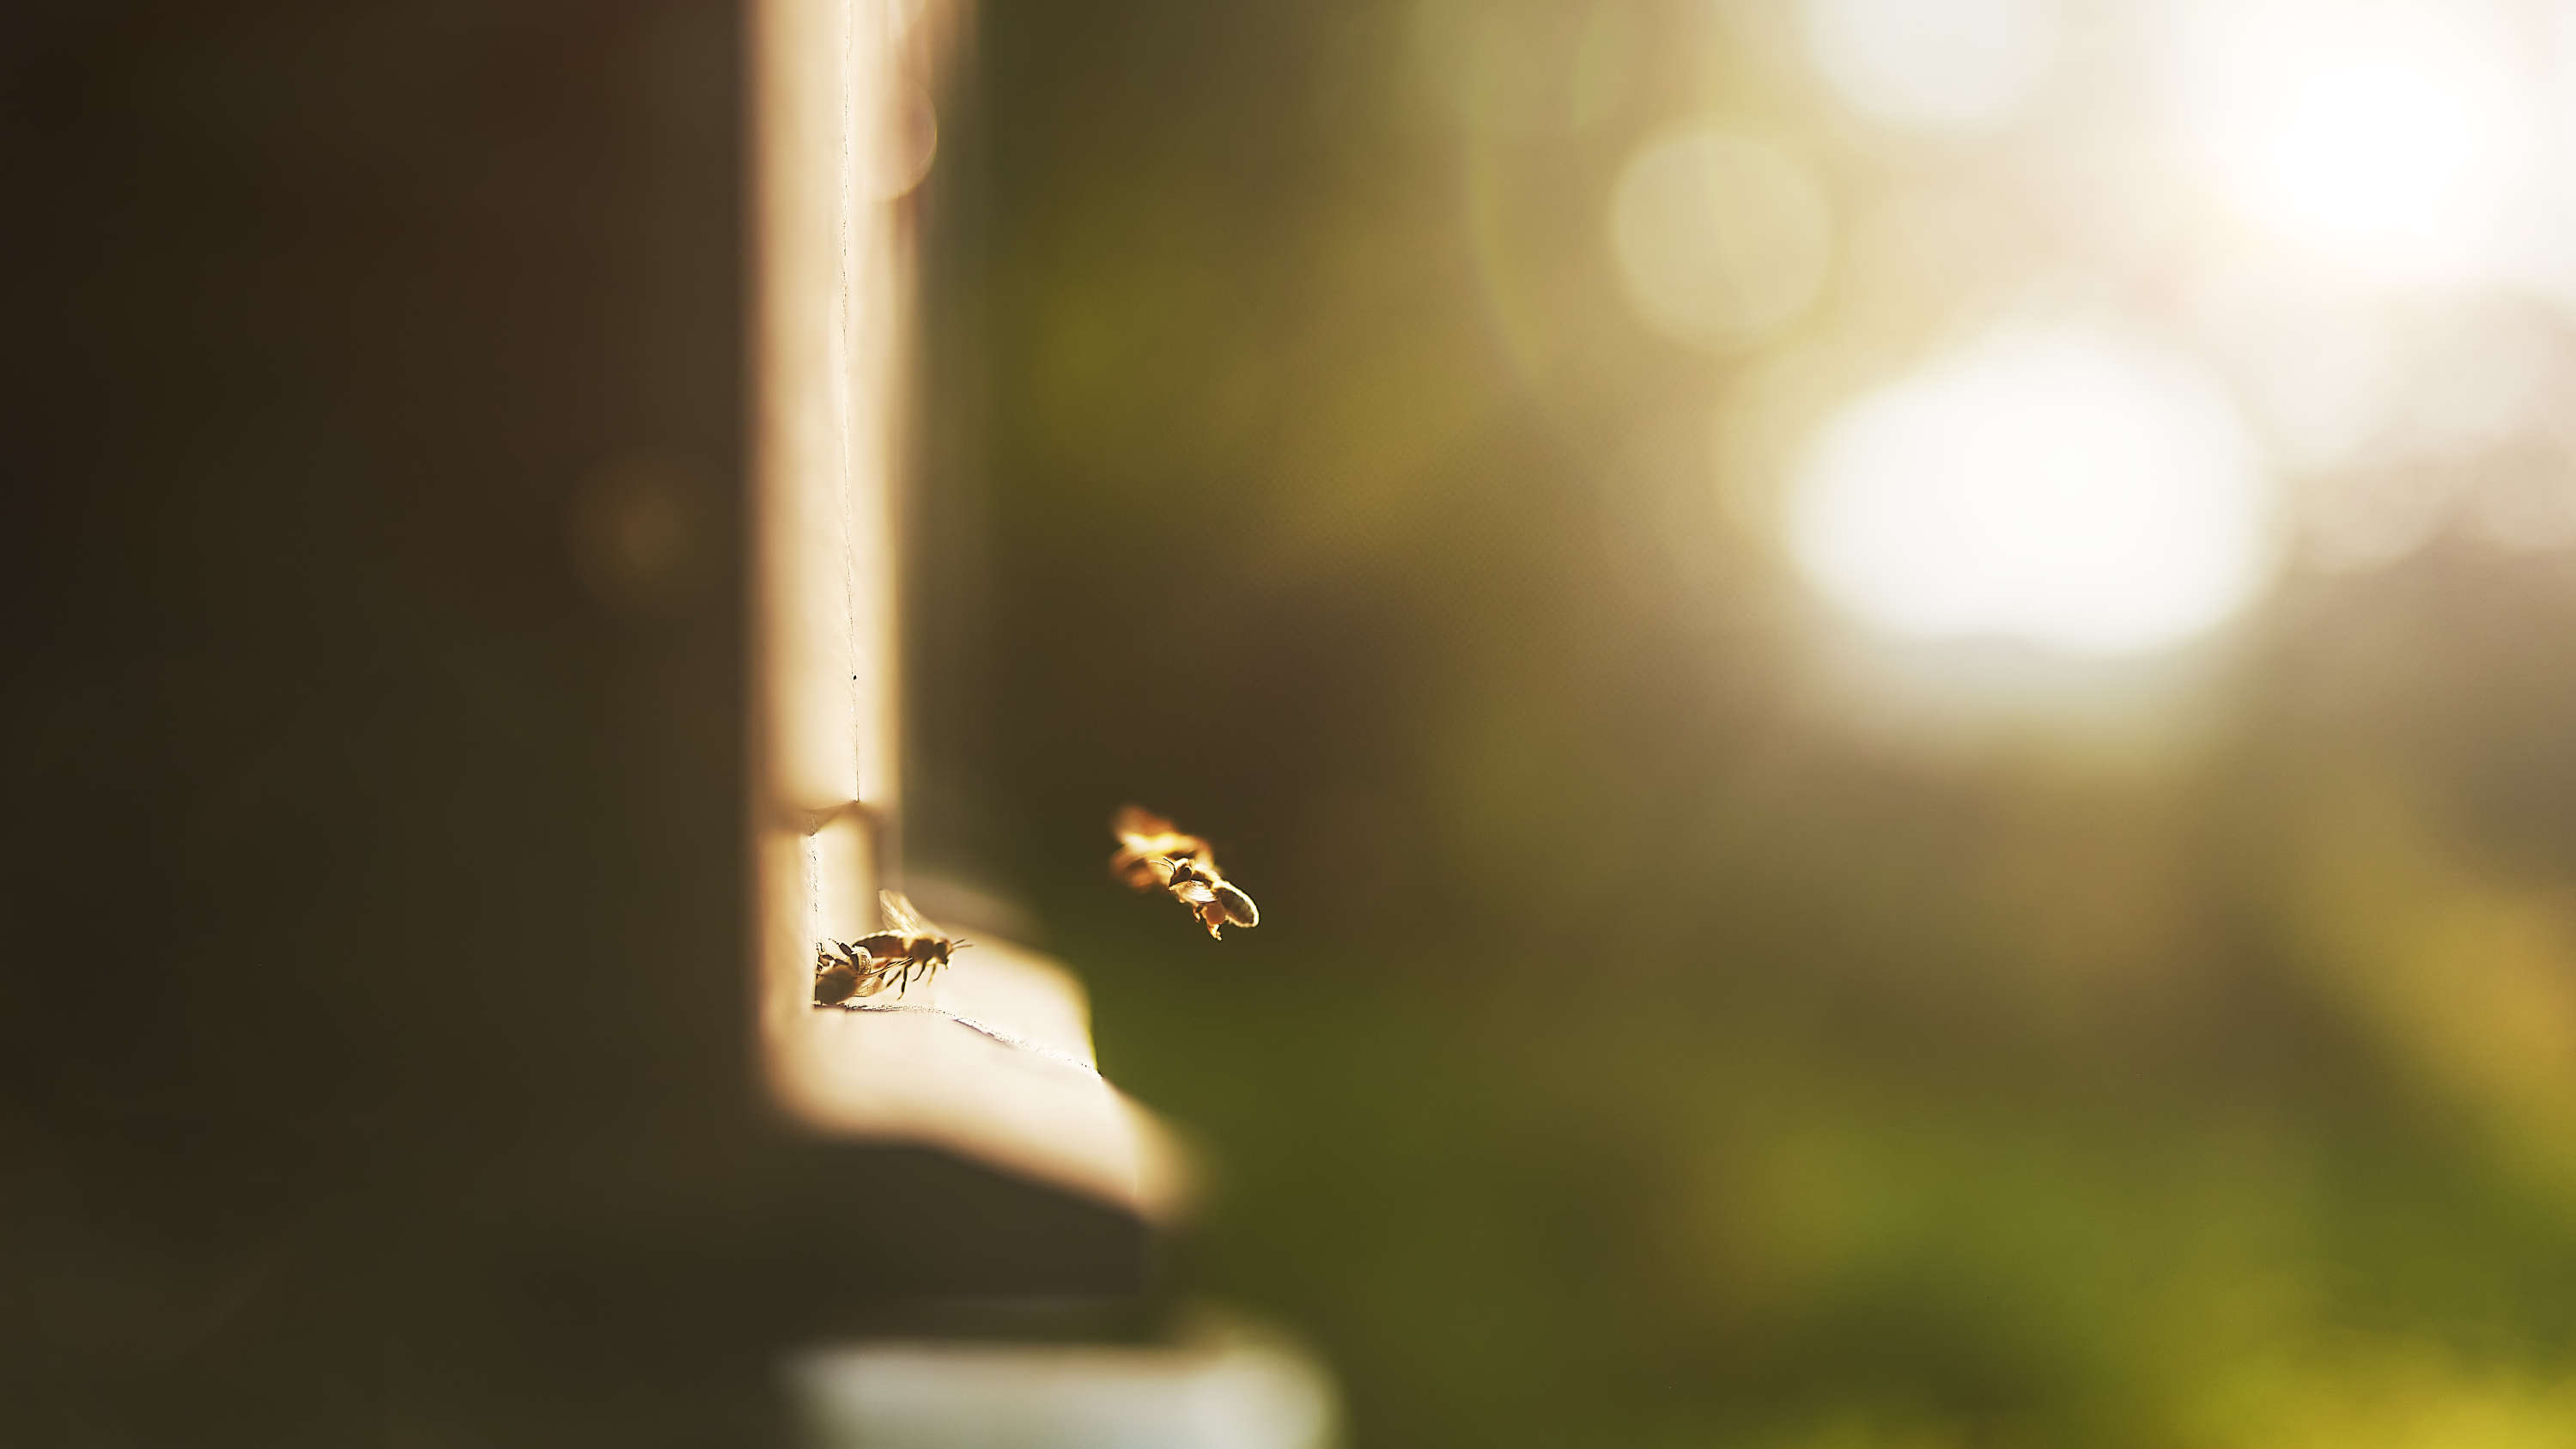 Beekeeper documentary